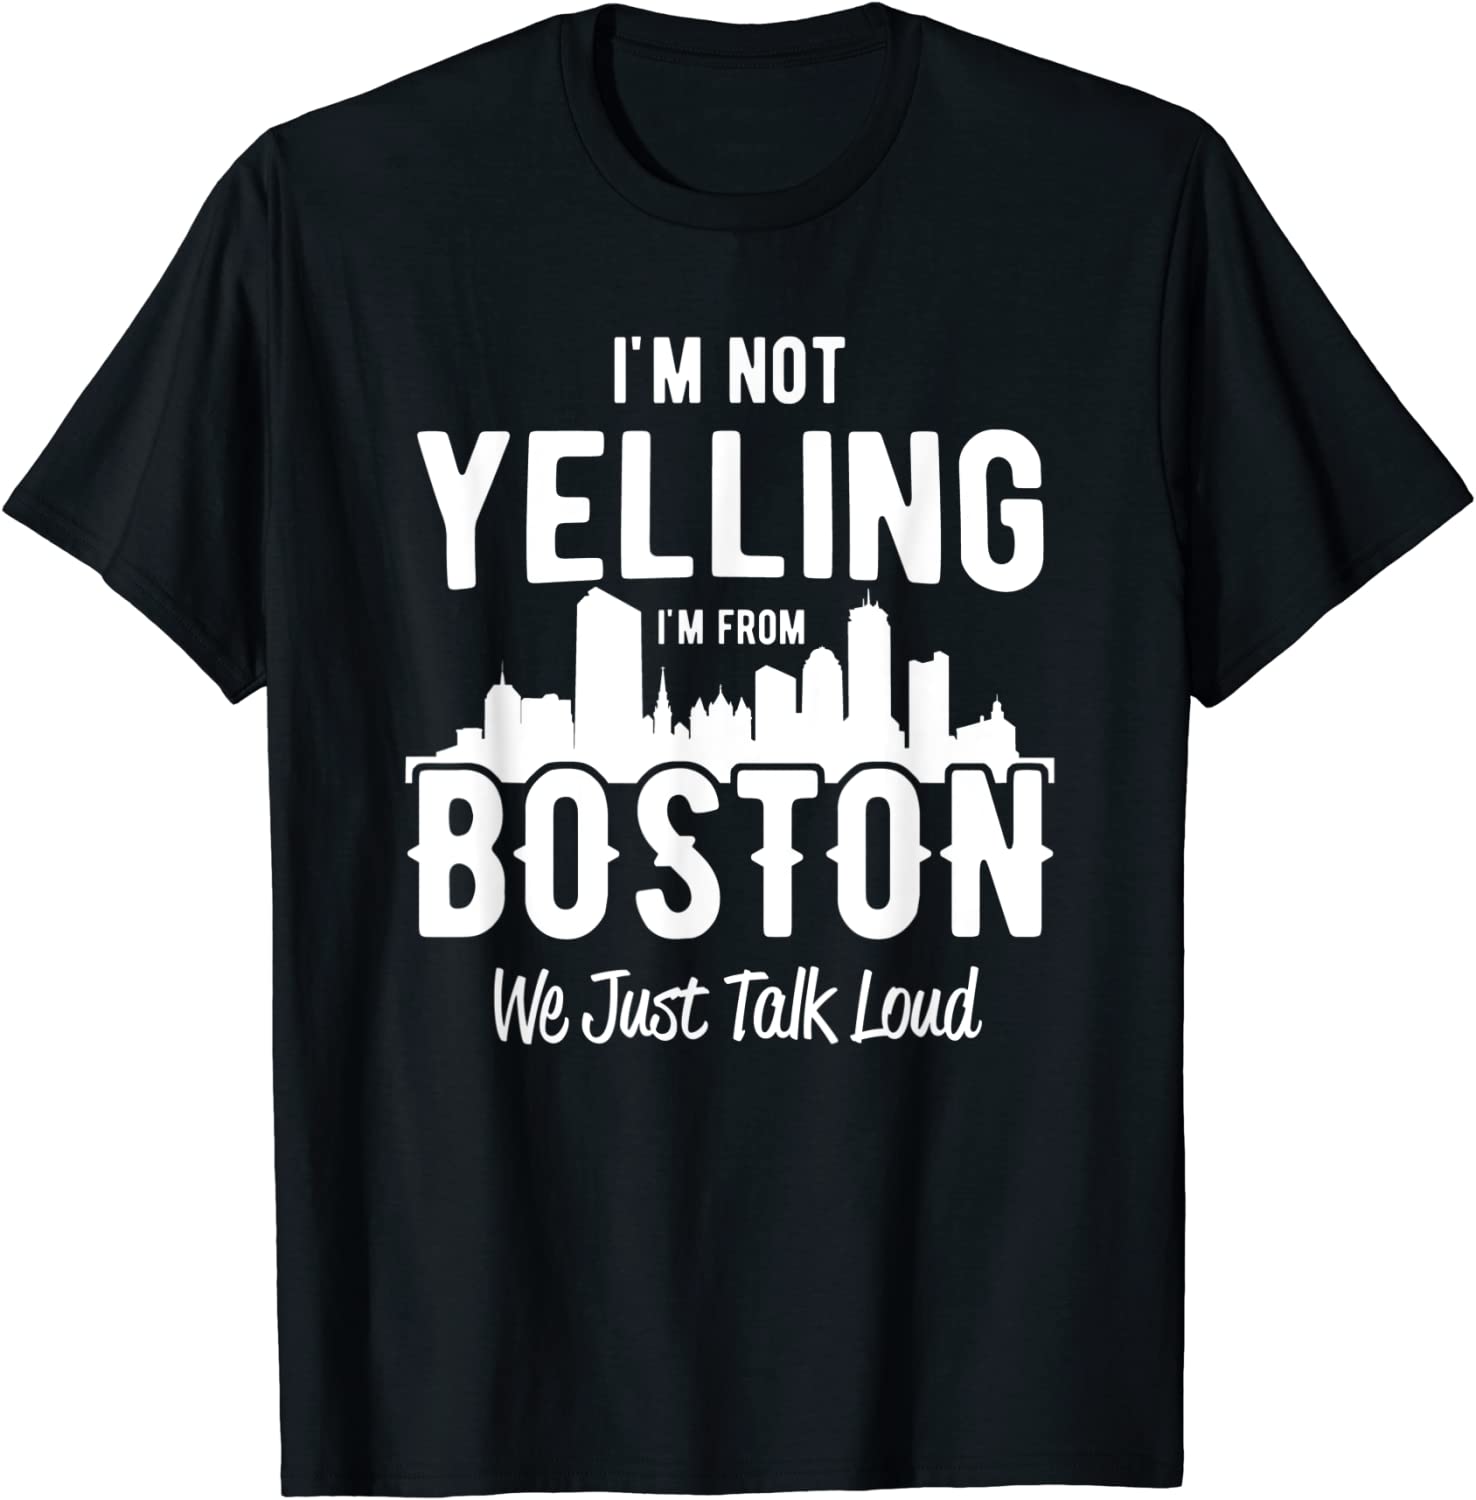 I'm not yelling I'm from Boston t-shirt